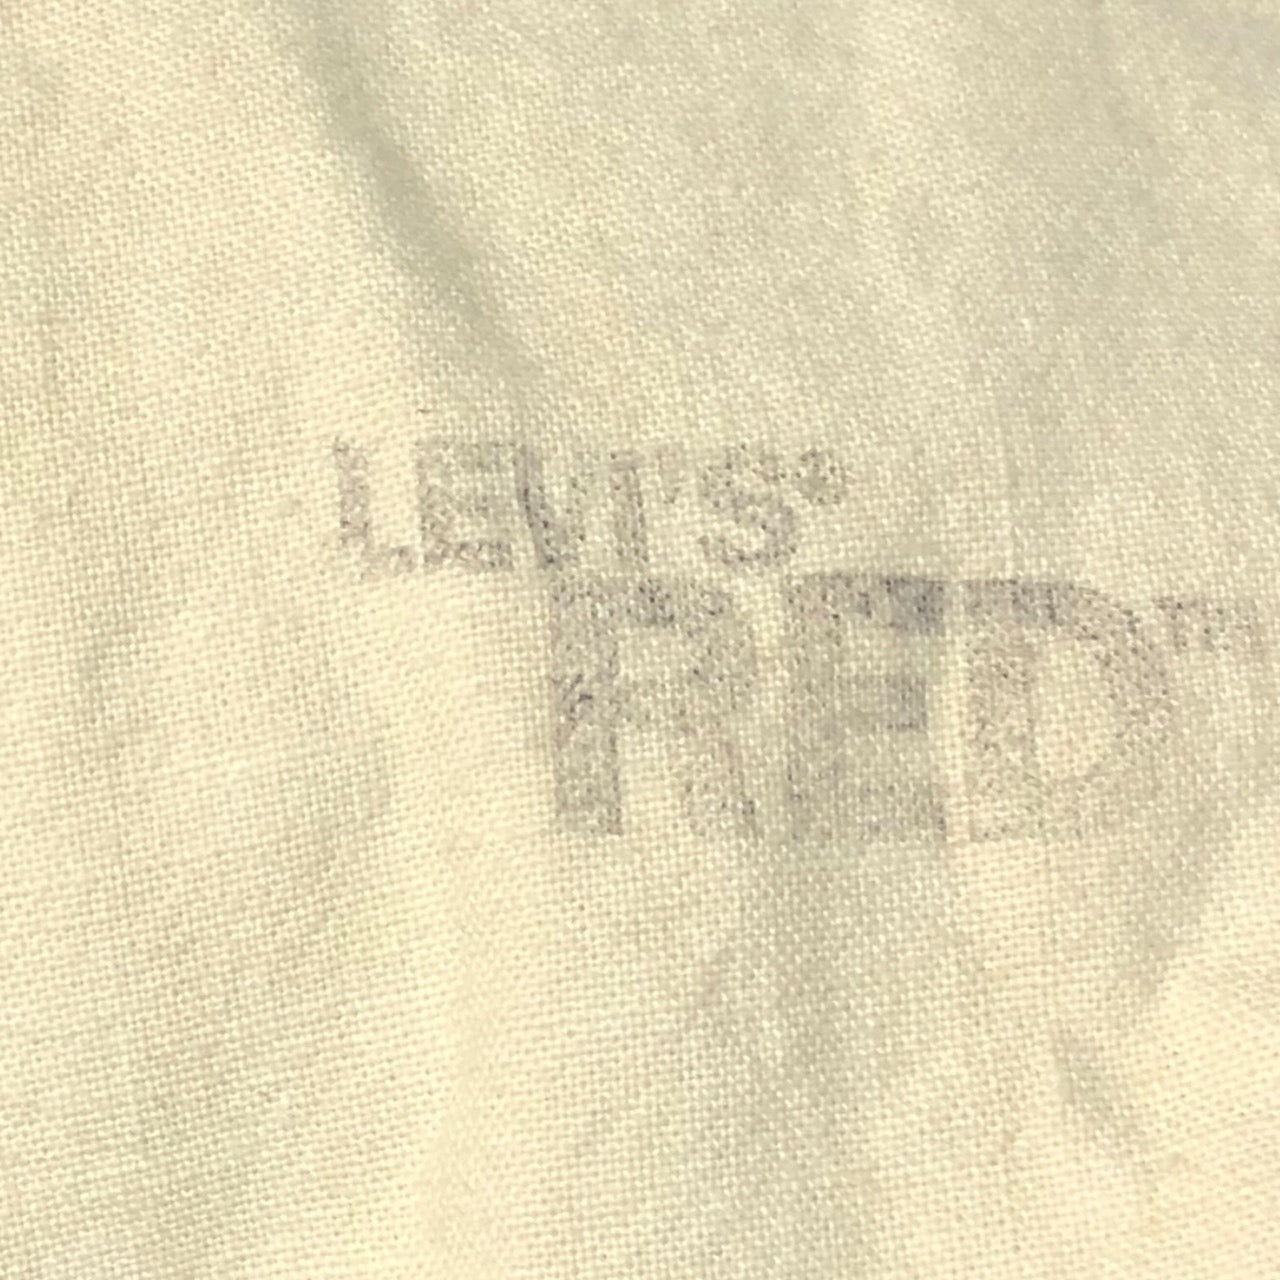 Levi's RED(リーバイスレッド) Initial 2 tone color 3D denim 初期 ツートーンカラー 立体裁断 デニム SIZE 30/34 インディゴ×ライトインディゴ